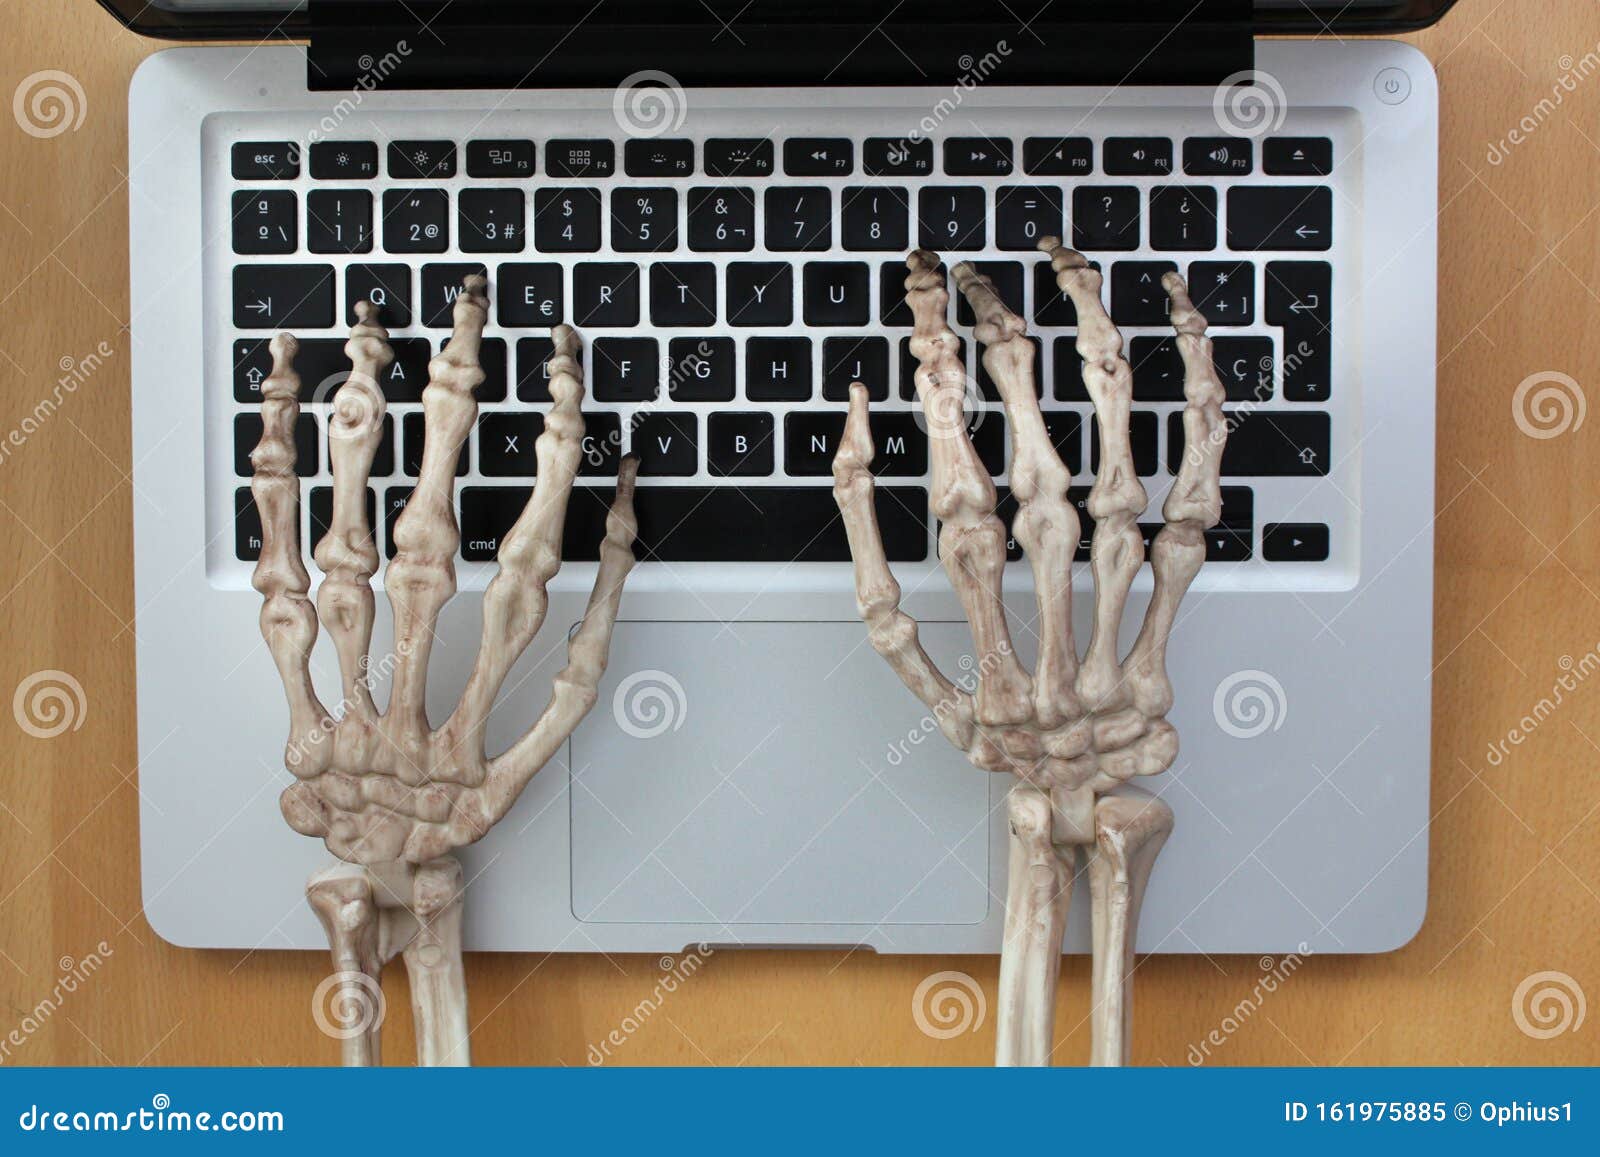 skeleton hands typing on laptop.